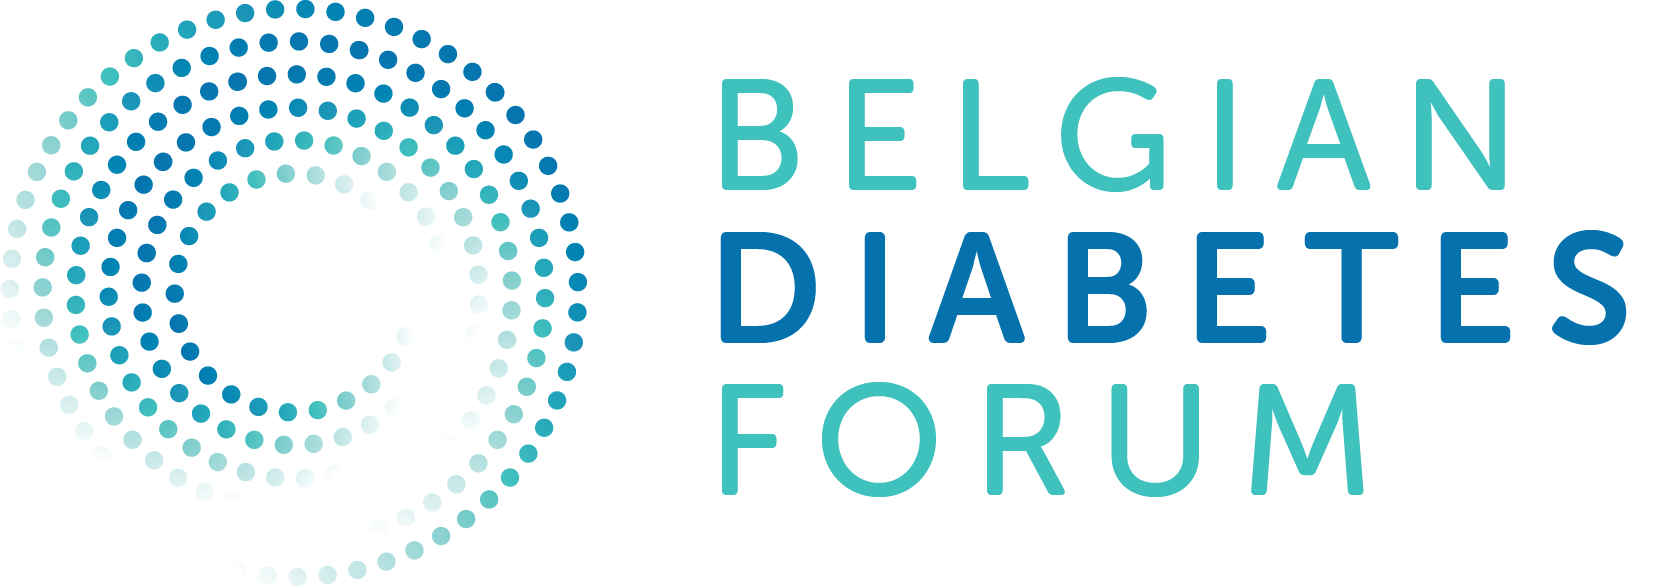 Belgian Diabetes Forum